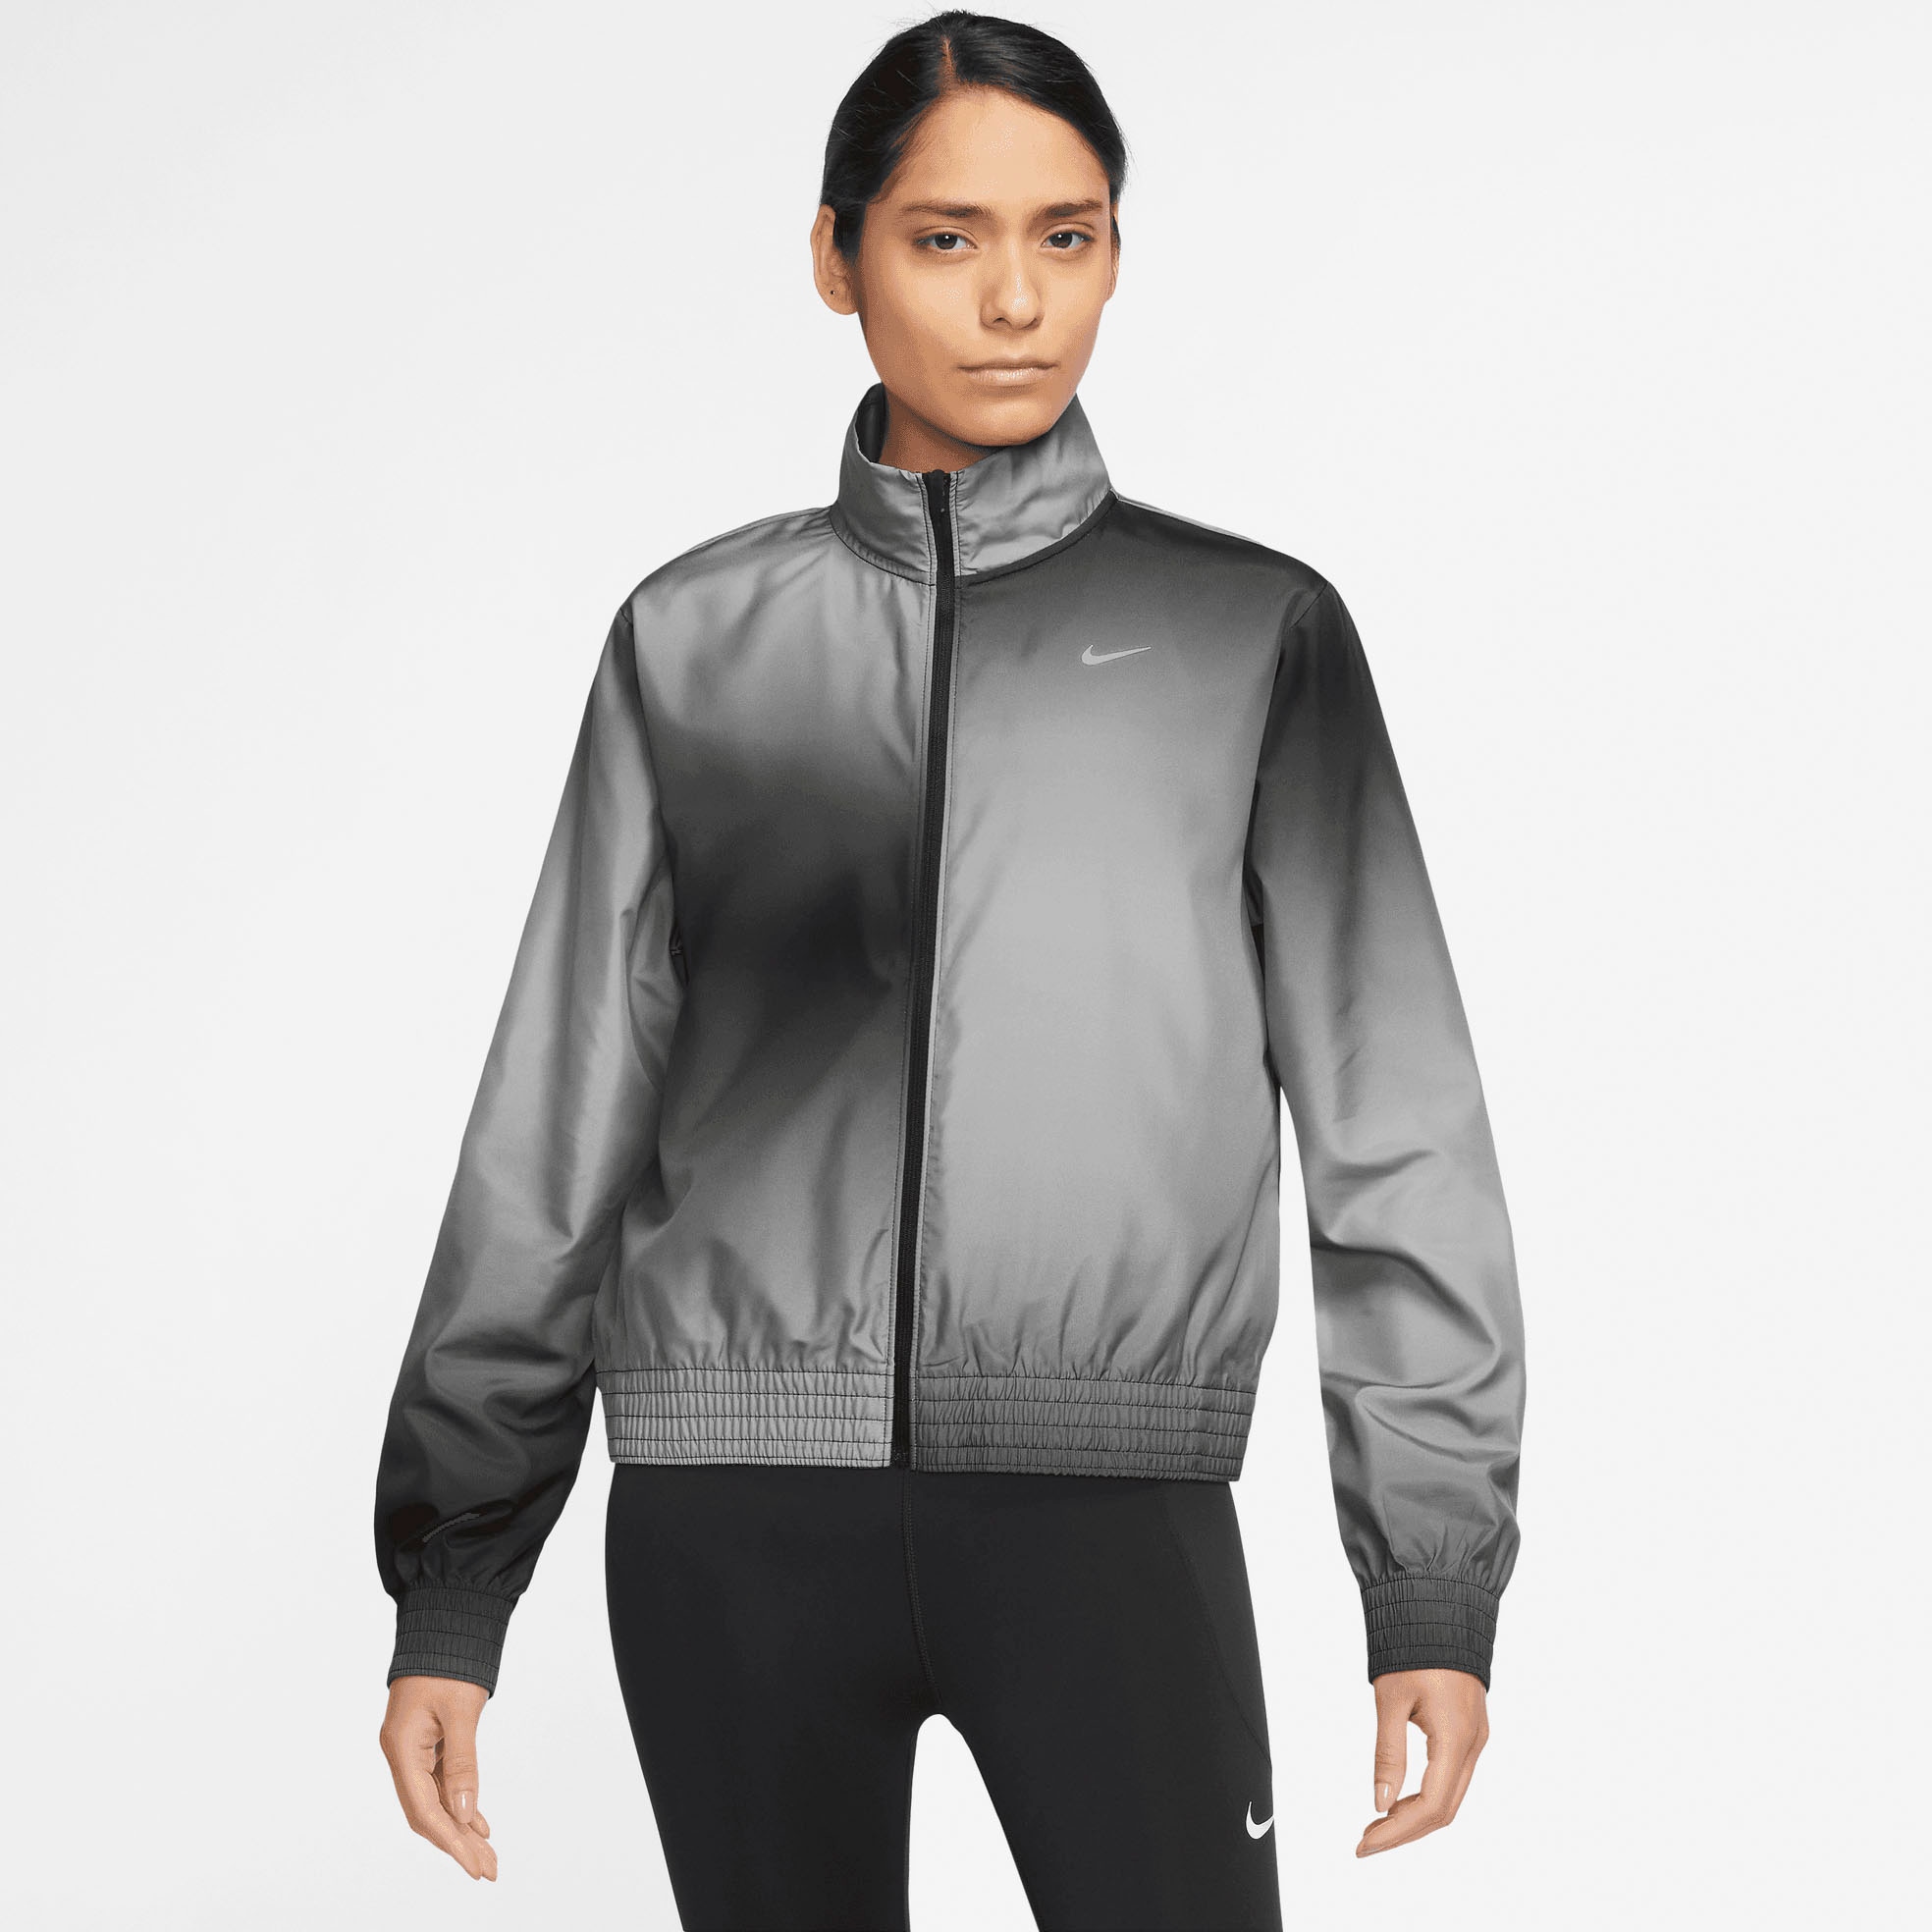 Entdecke Nike Laufjacke Jacket« Run Printed Women\'s auf Swoosh Running »Dri-FIT